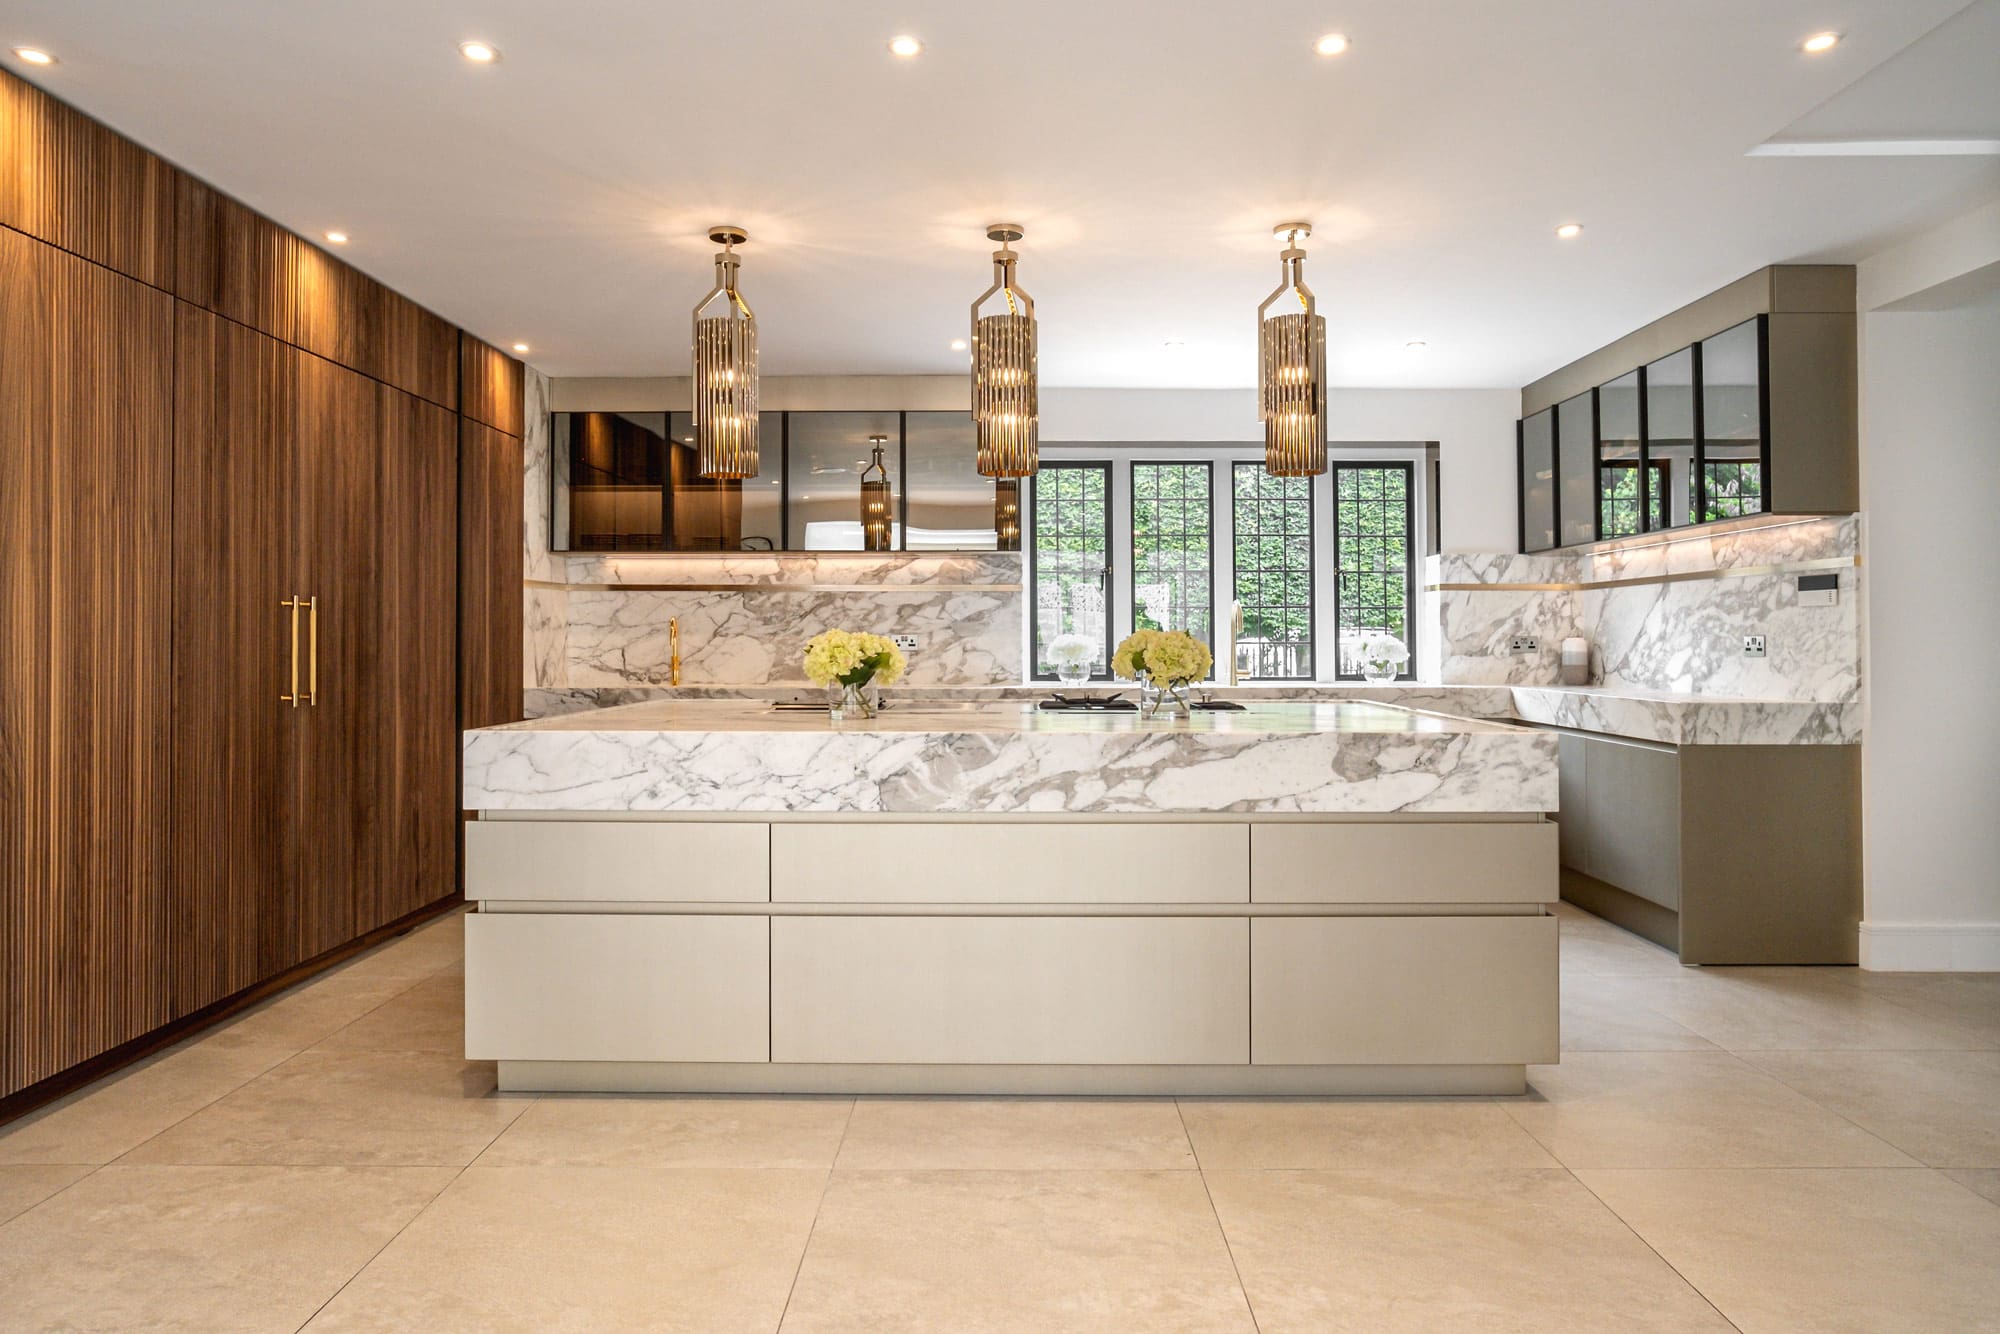 Moor Park bespoke kitchen by Fontana London using Key Cucine cabinetry